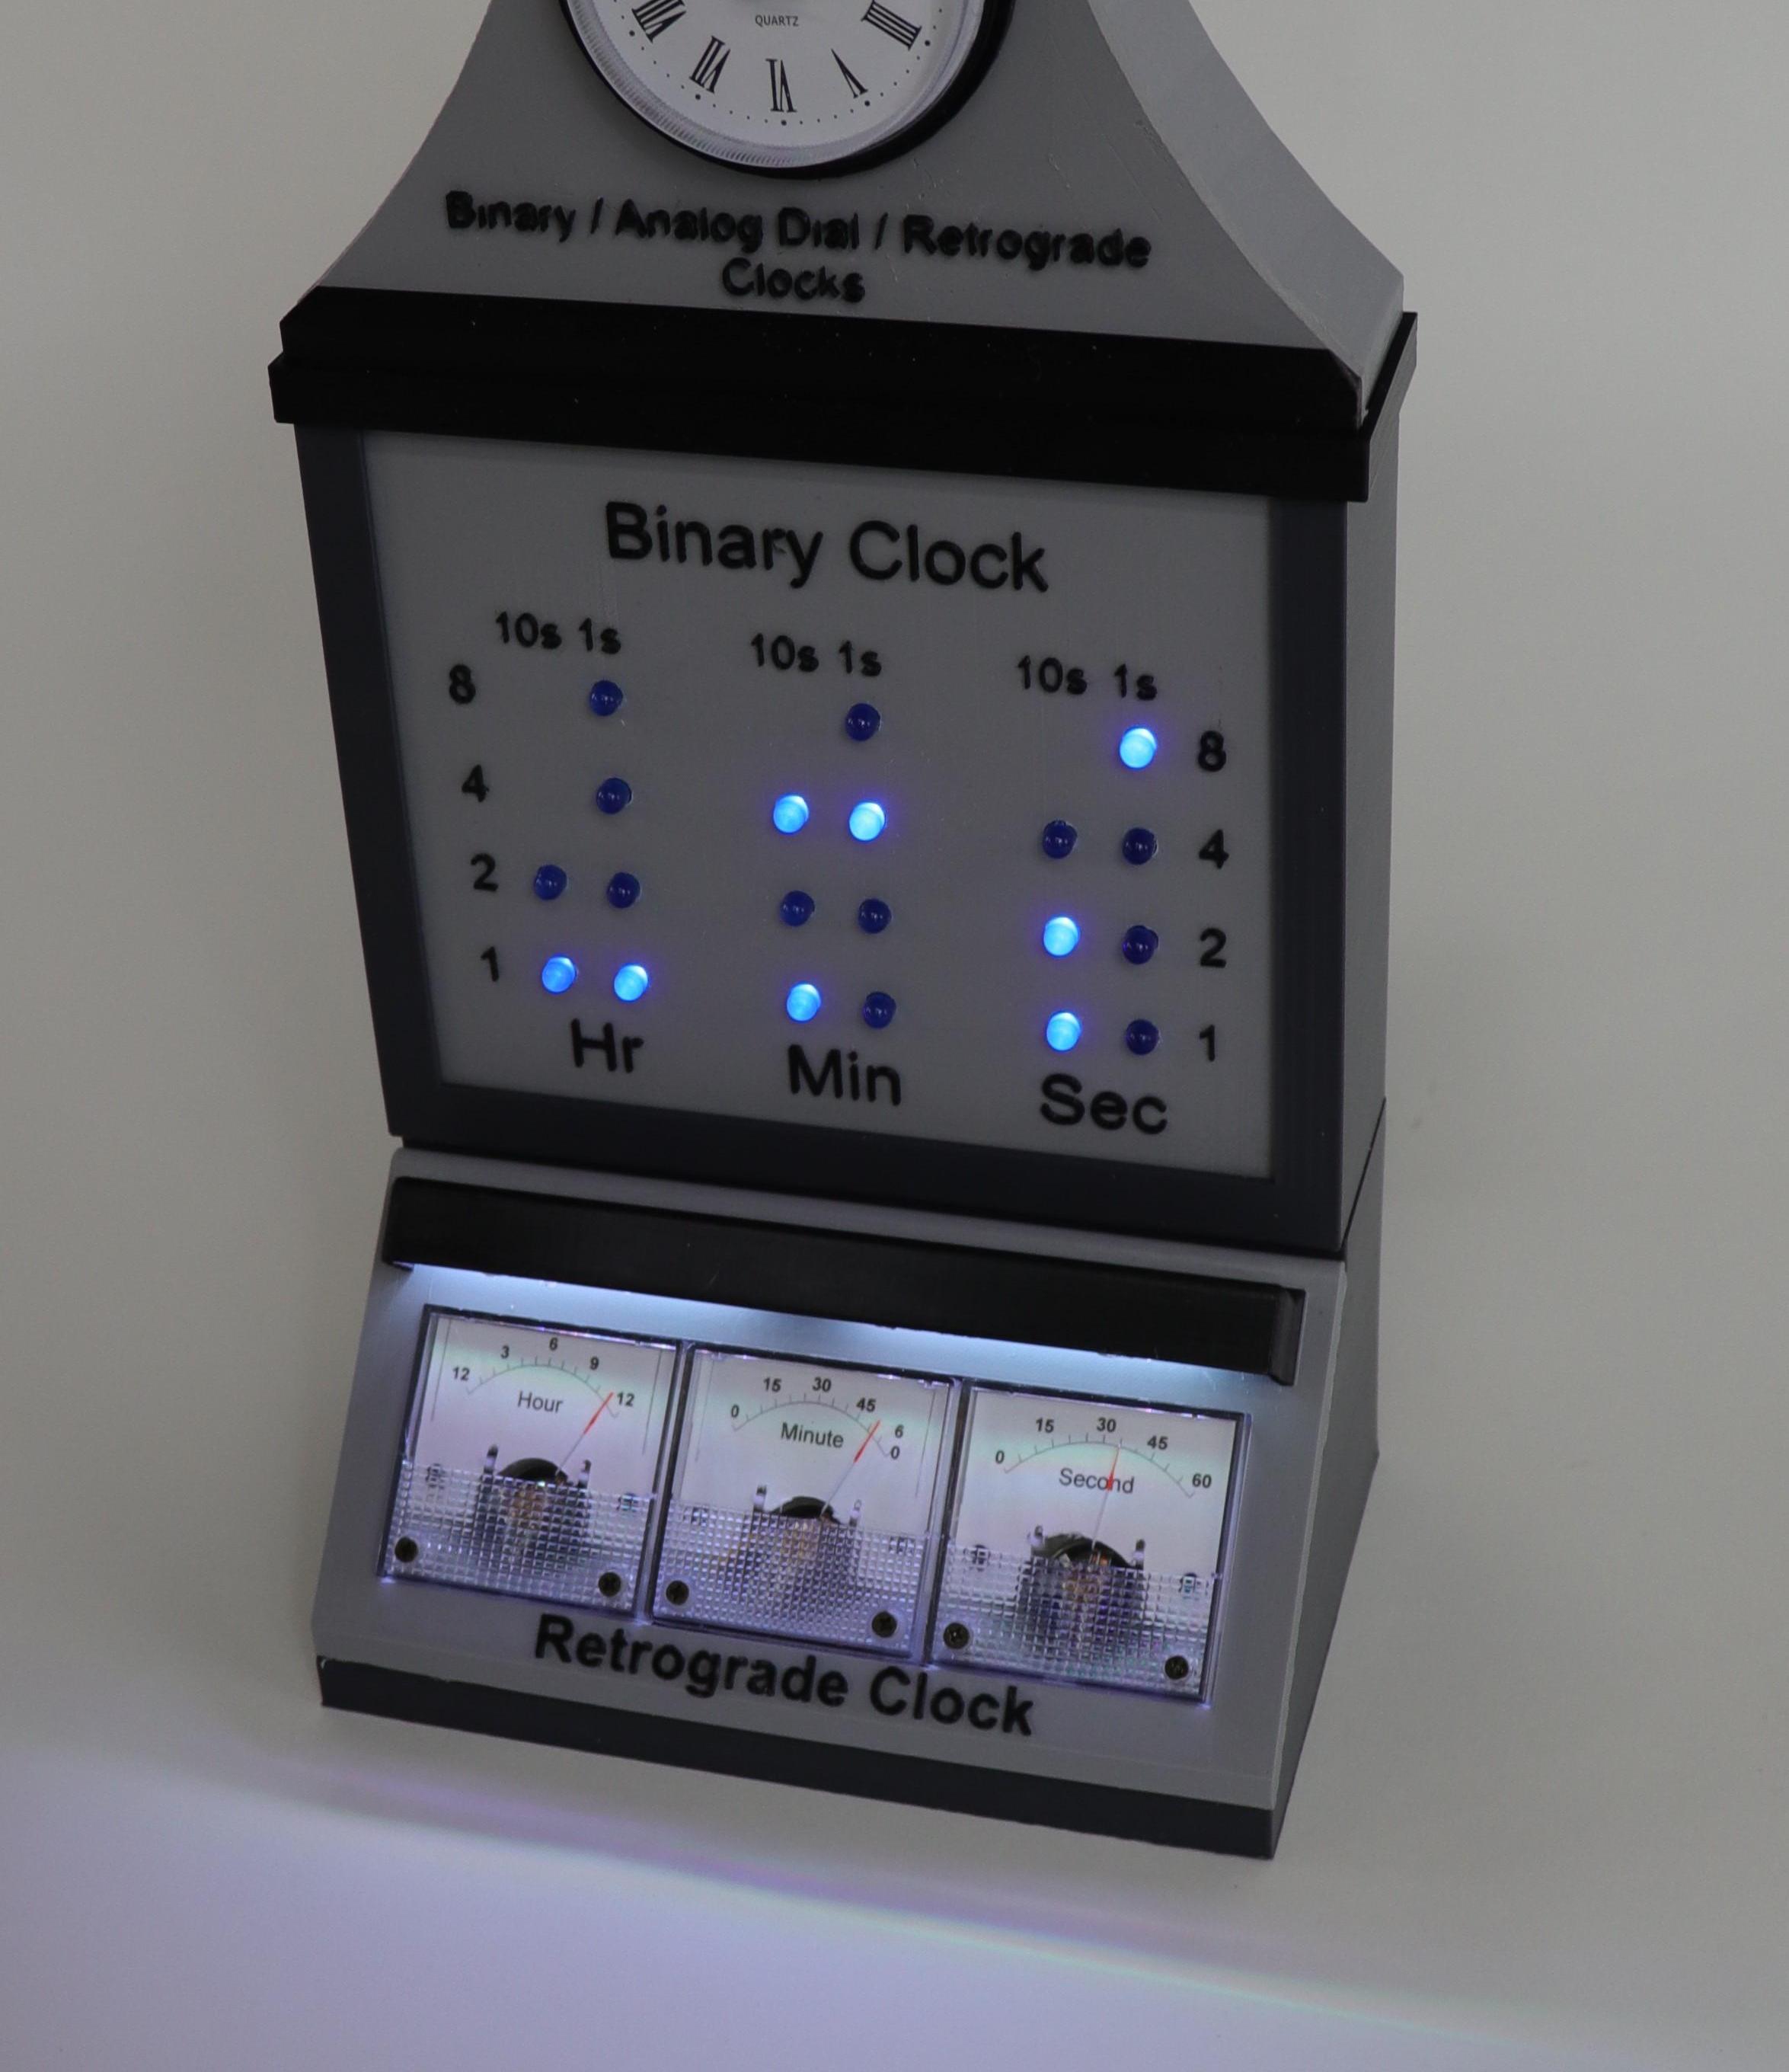 Binary-Analog Dial-Retrograde Clock or the BAD-R Clock or the Rosetta Stone Clock